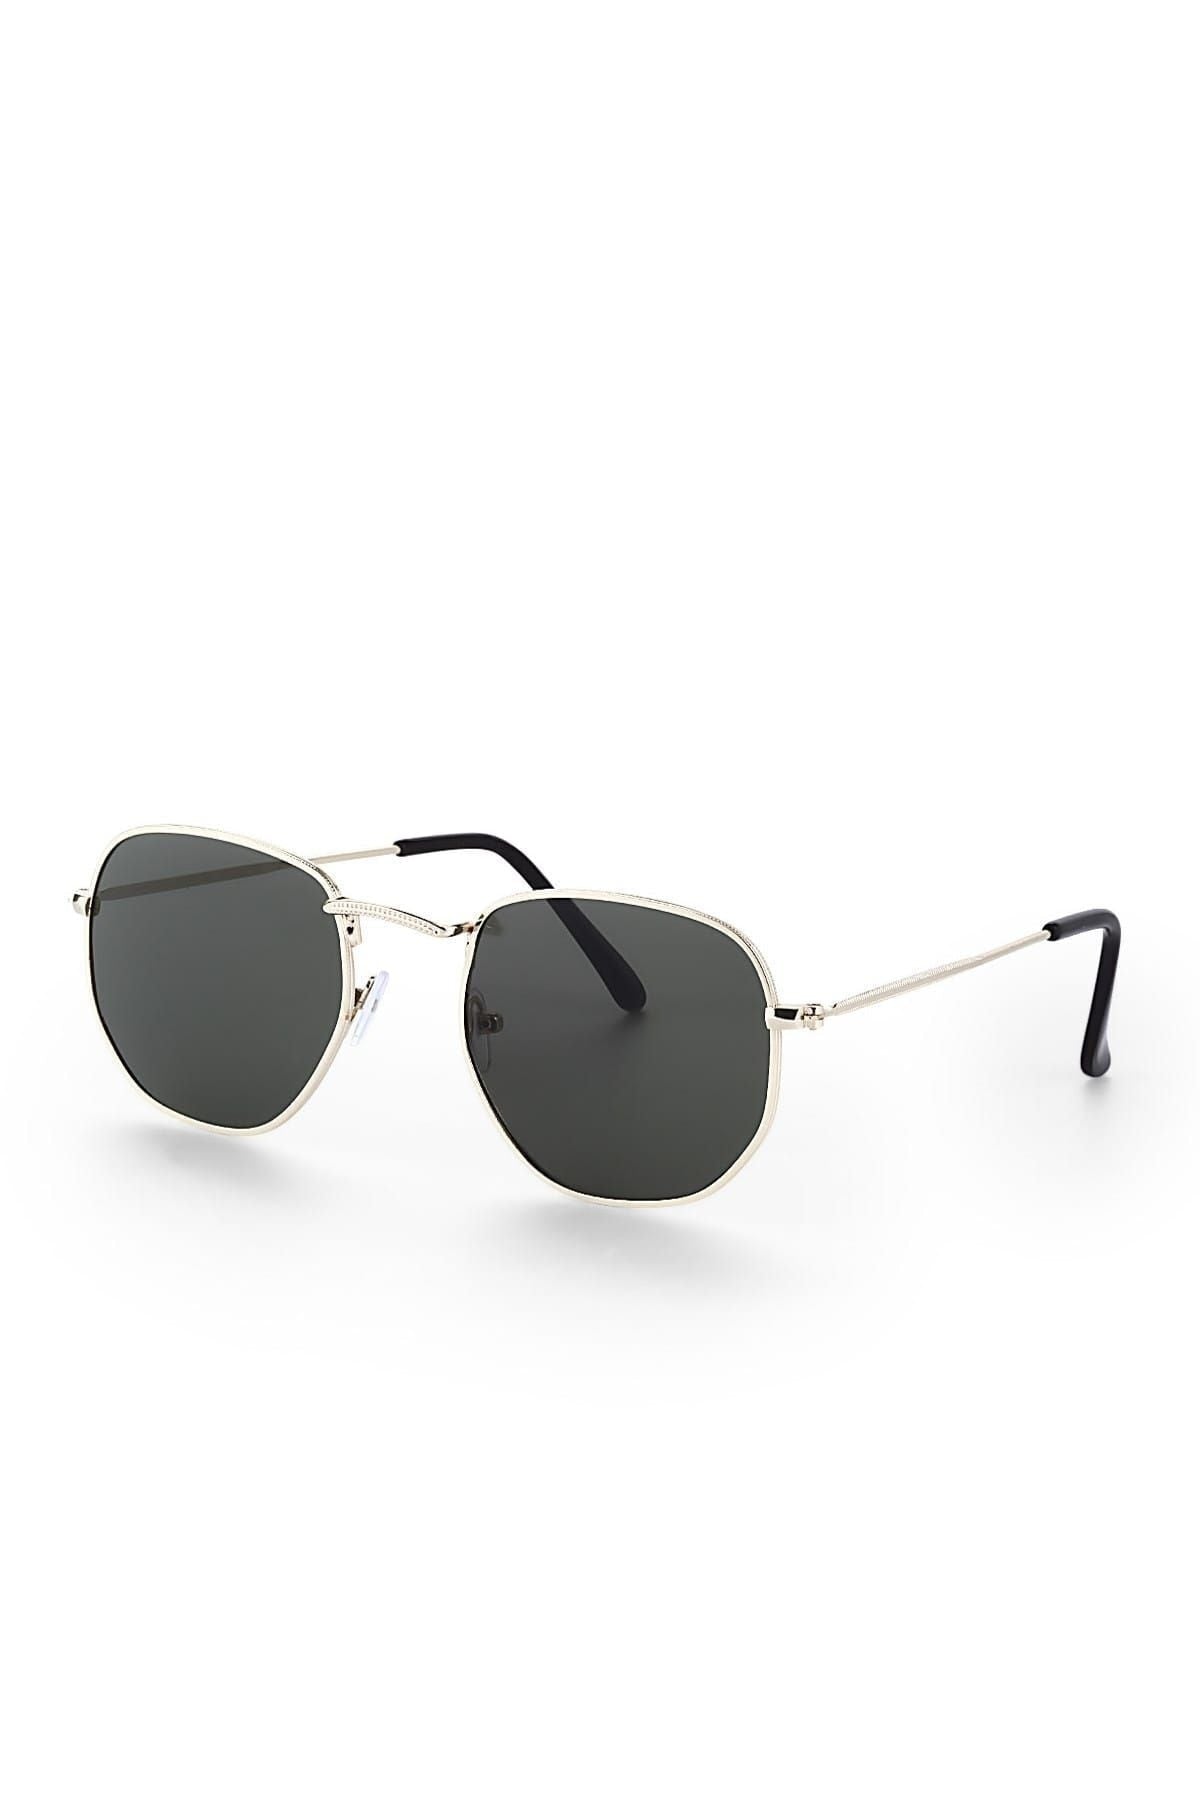 Silver Metal Framed Pentagon Unisex Sunglasses